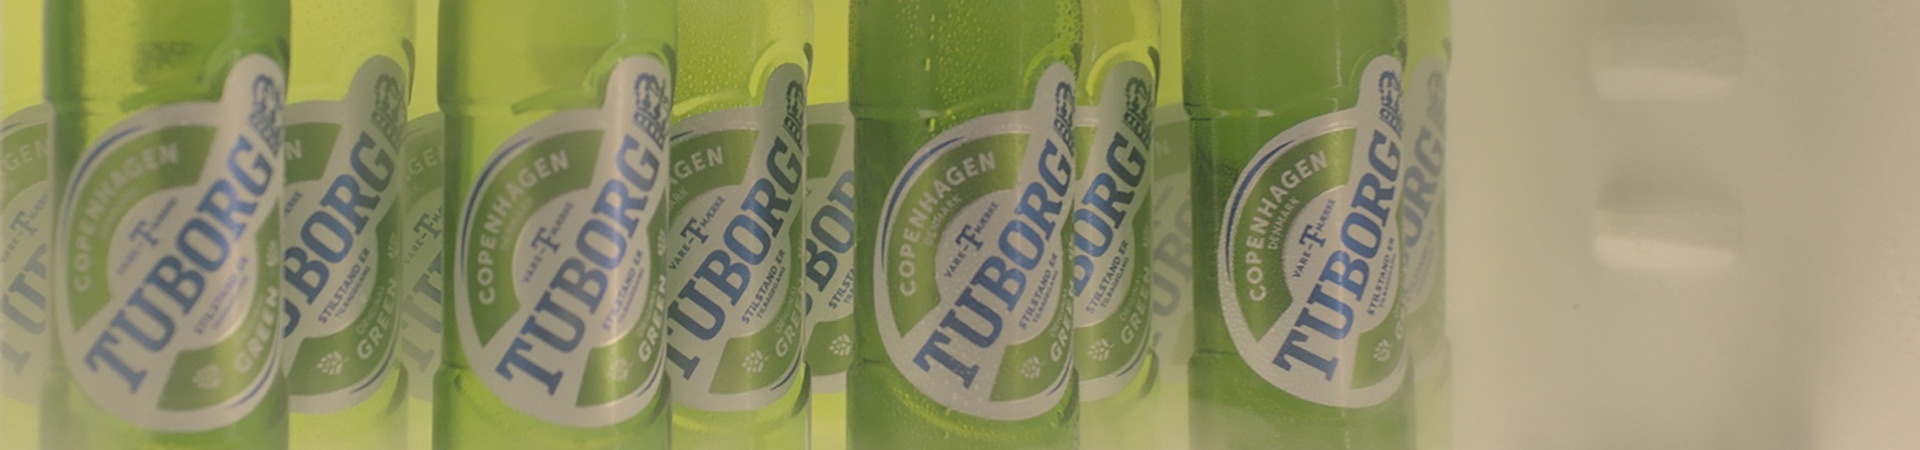 Tuborg is a bottom fermented lager beer.